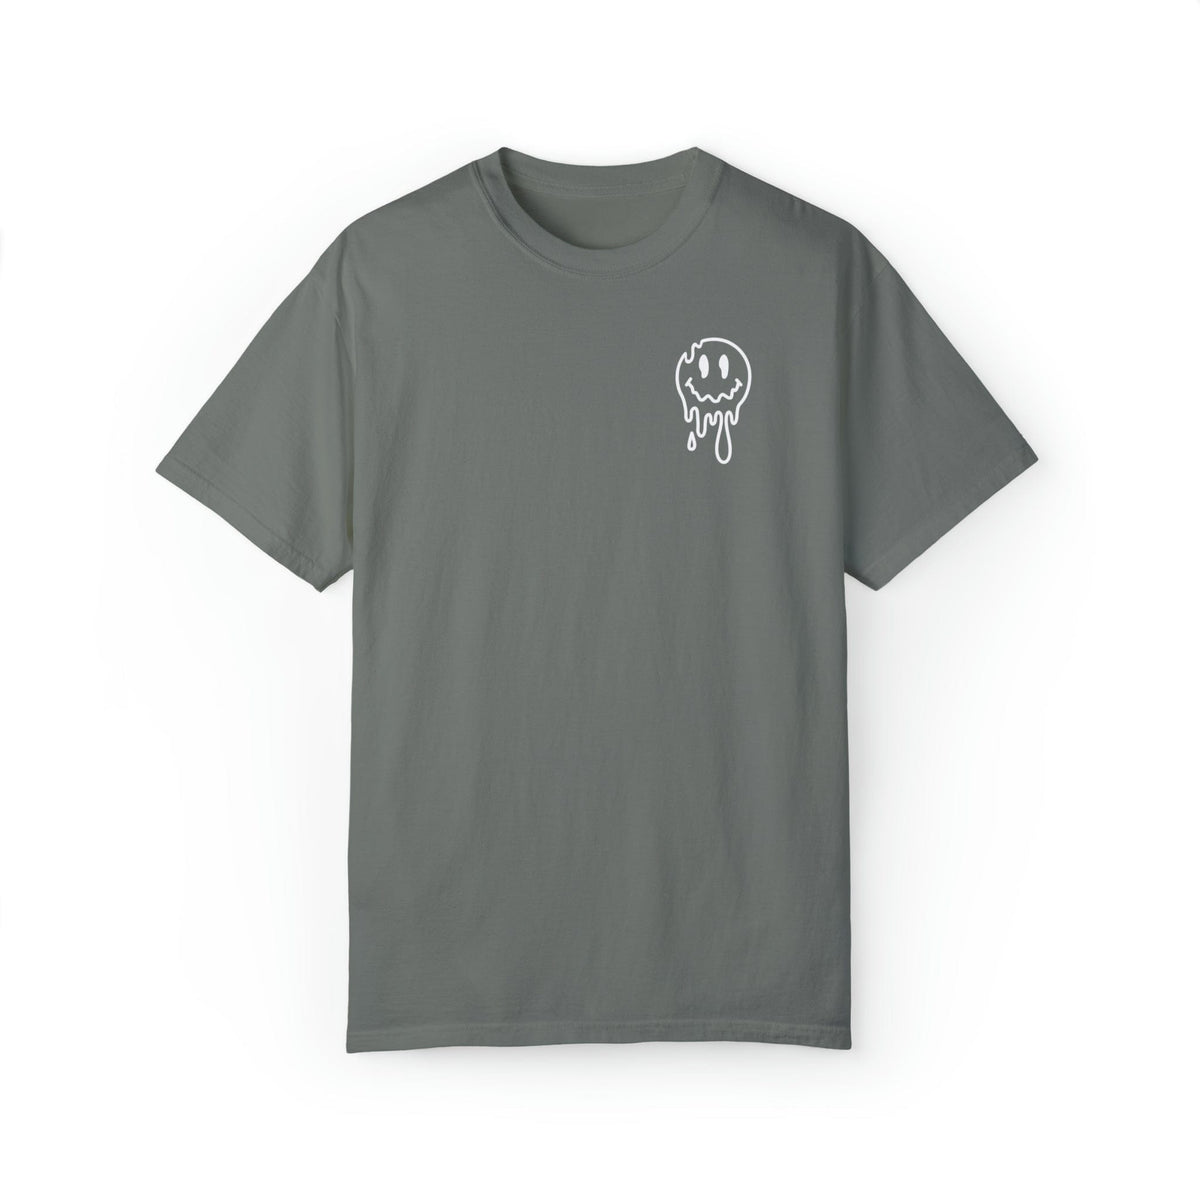 Joker Smoker Toker Graphic Tee T-Shirt TheFringeCultureCollective